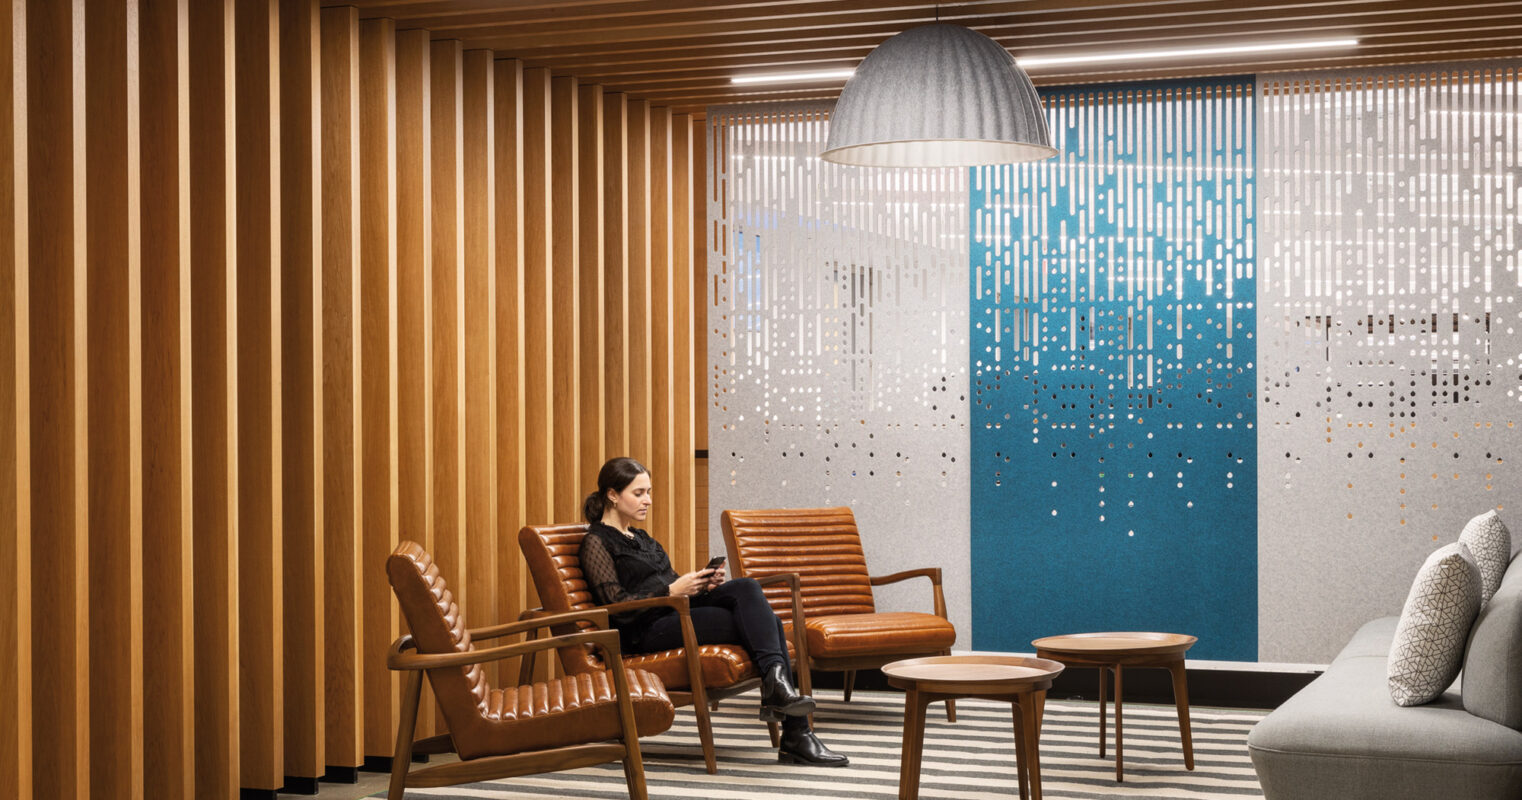 Corporate interior with dramatic lighting